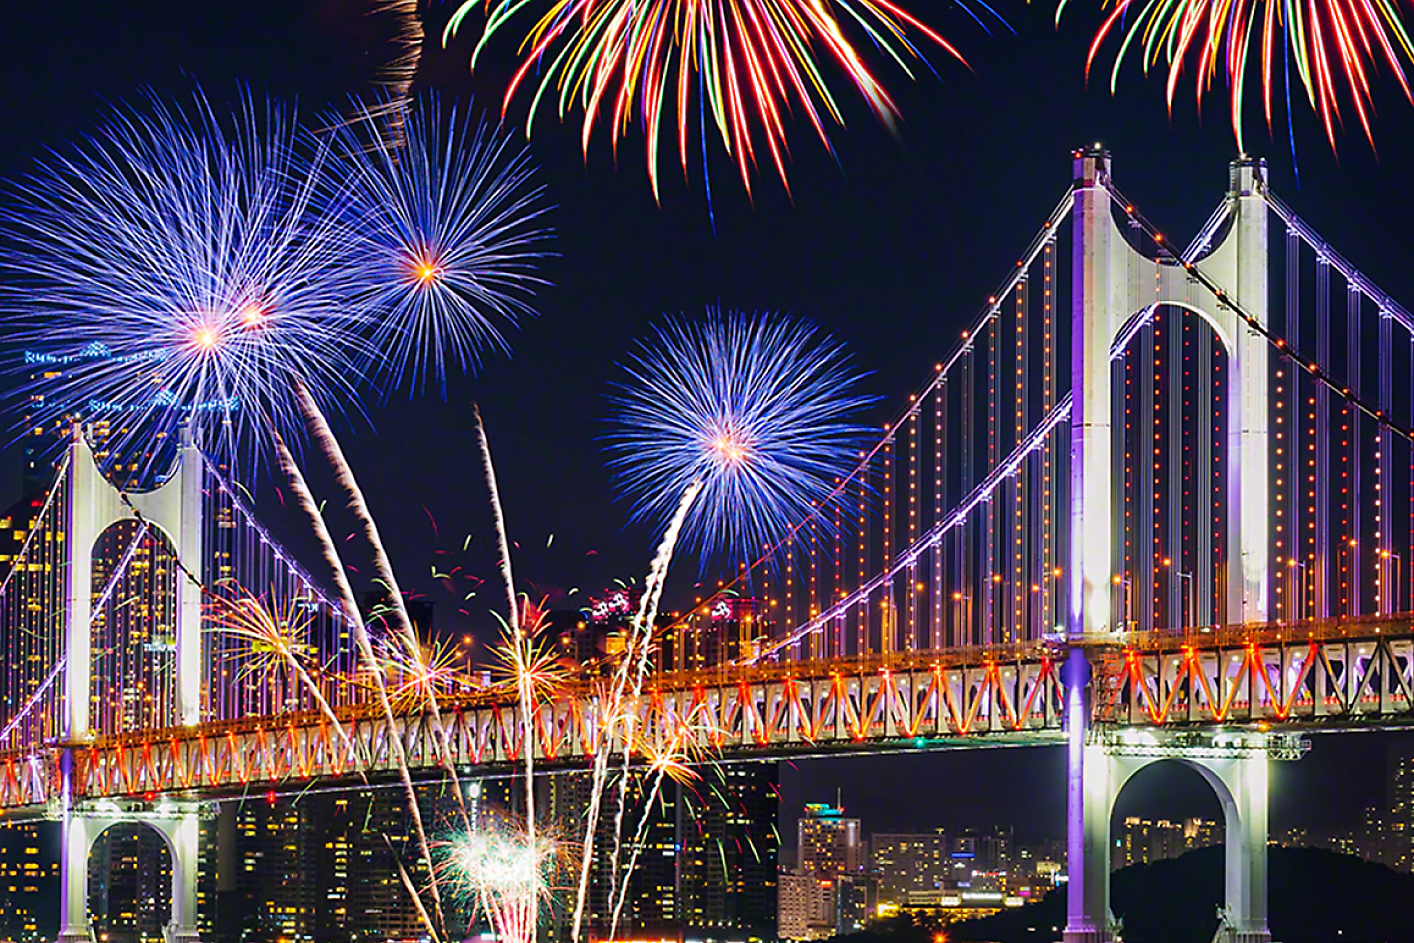 Colourful fireworks explode over a bridge